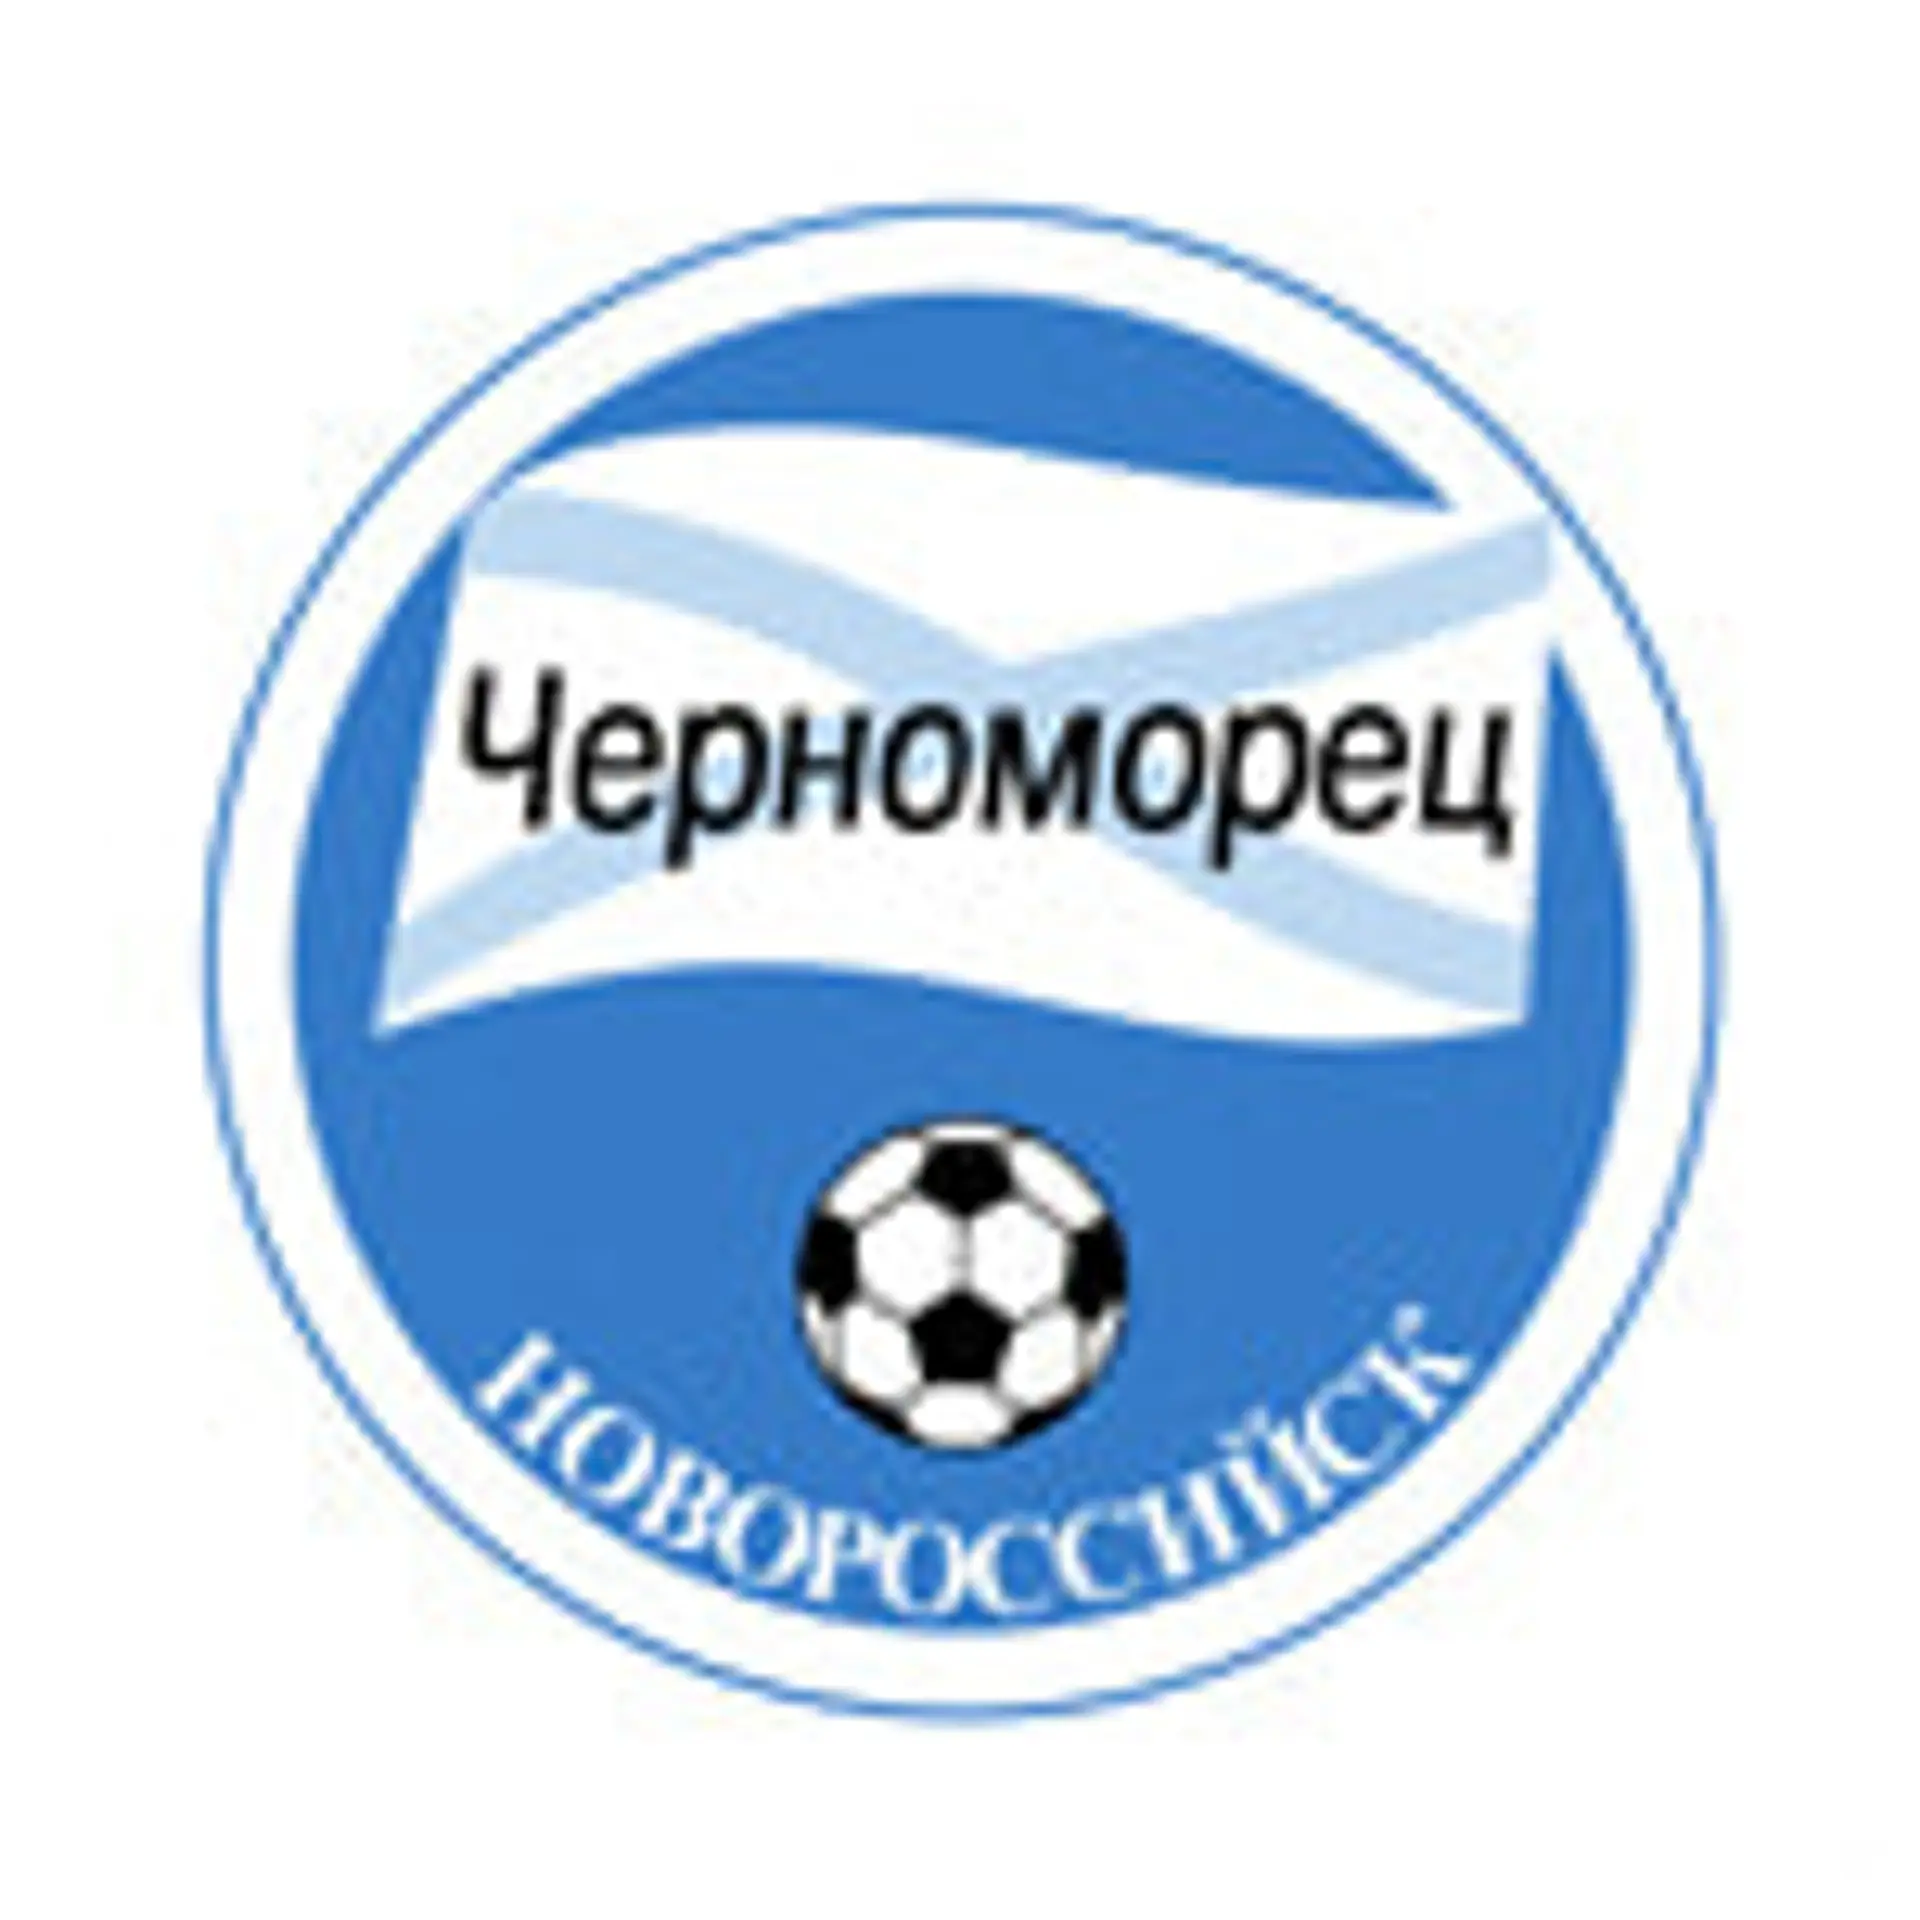 FC Chernomorets Novorossiysk Clasificaciones 